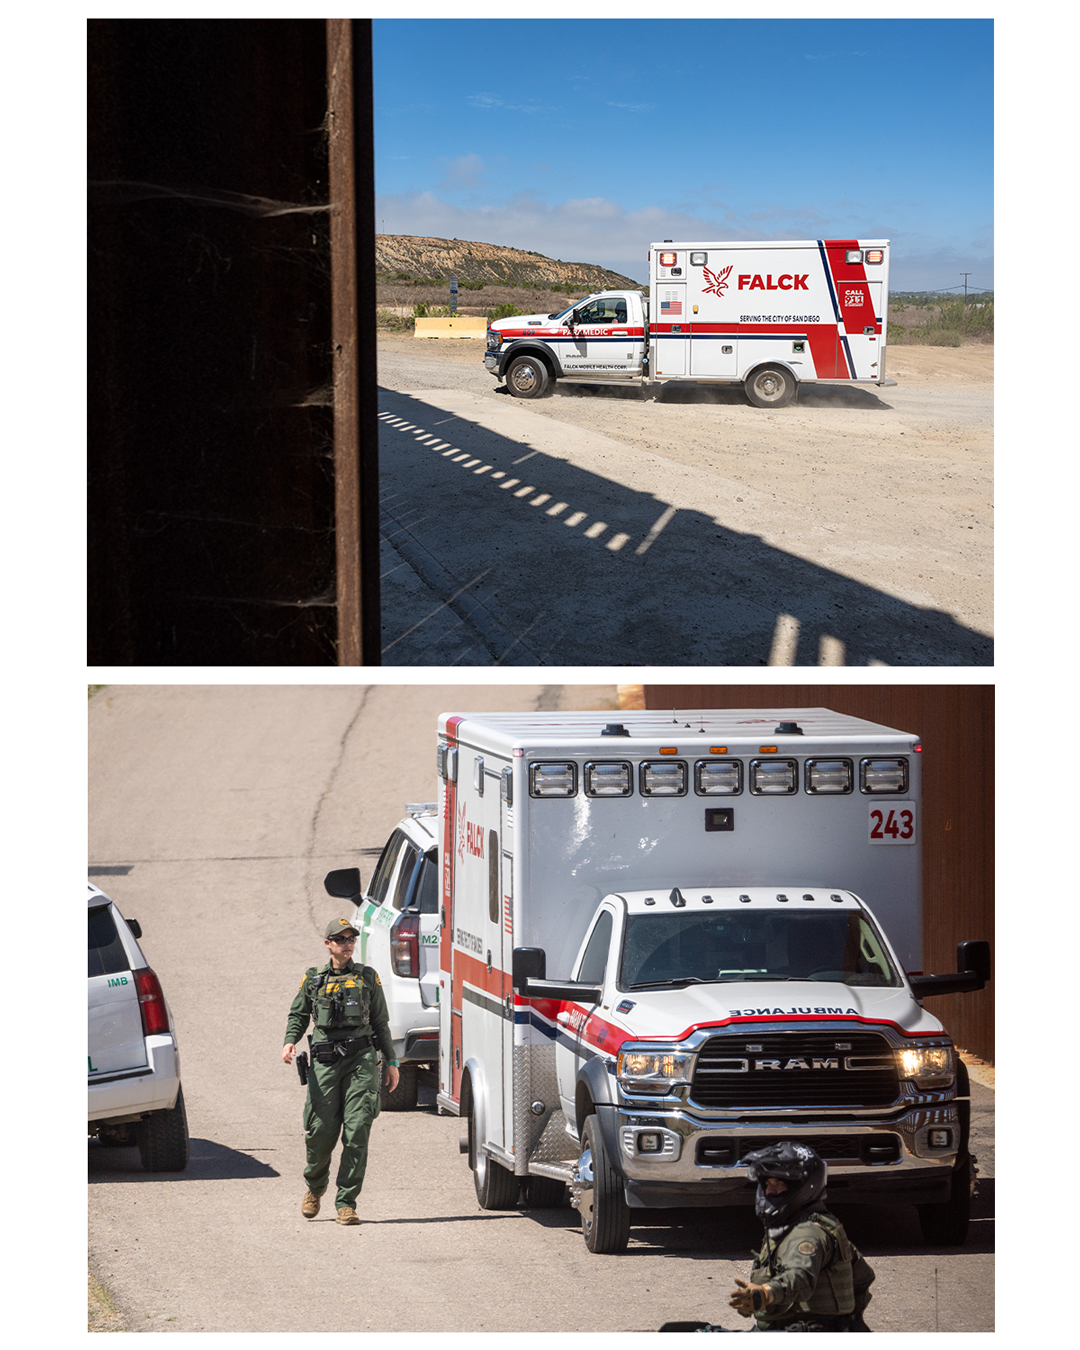 Top: Image of an ambulance
Bottom: Border patrol agents wave the ambulance through.